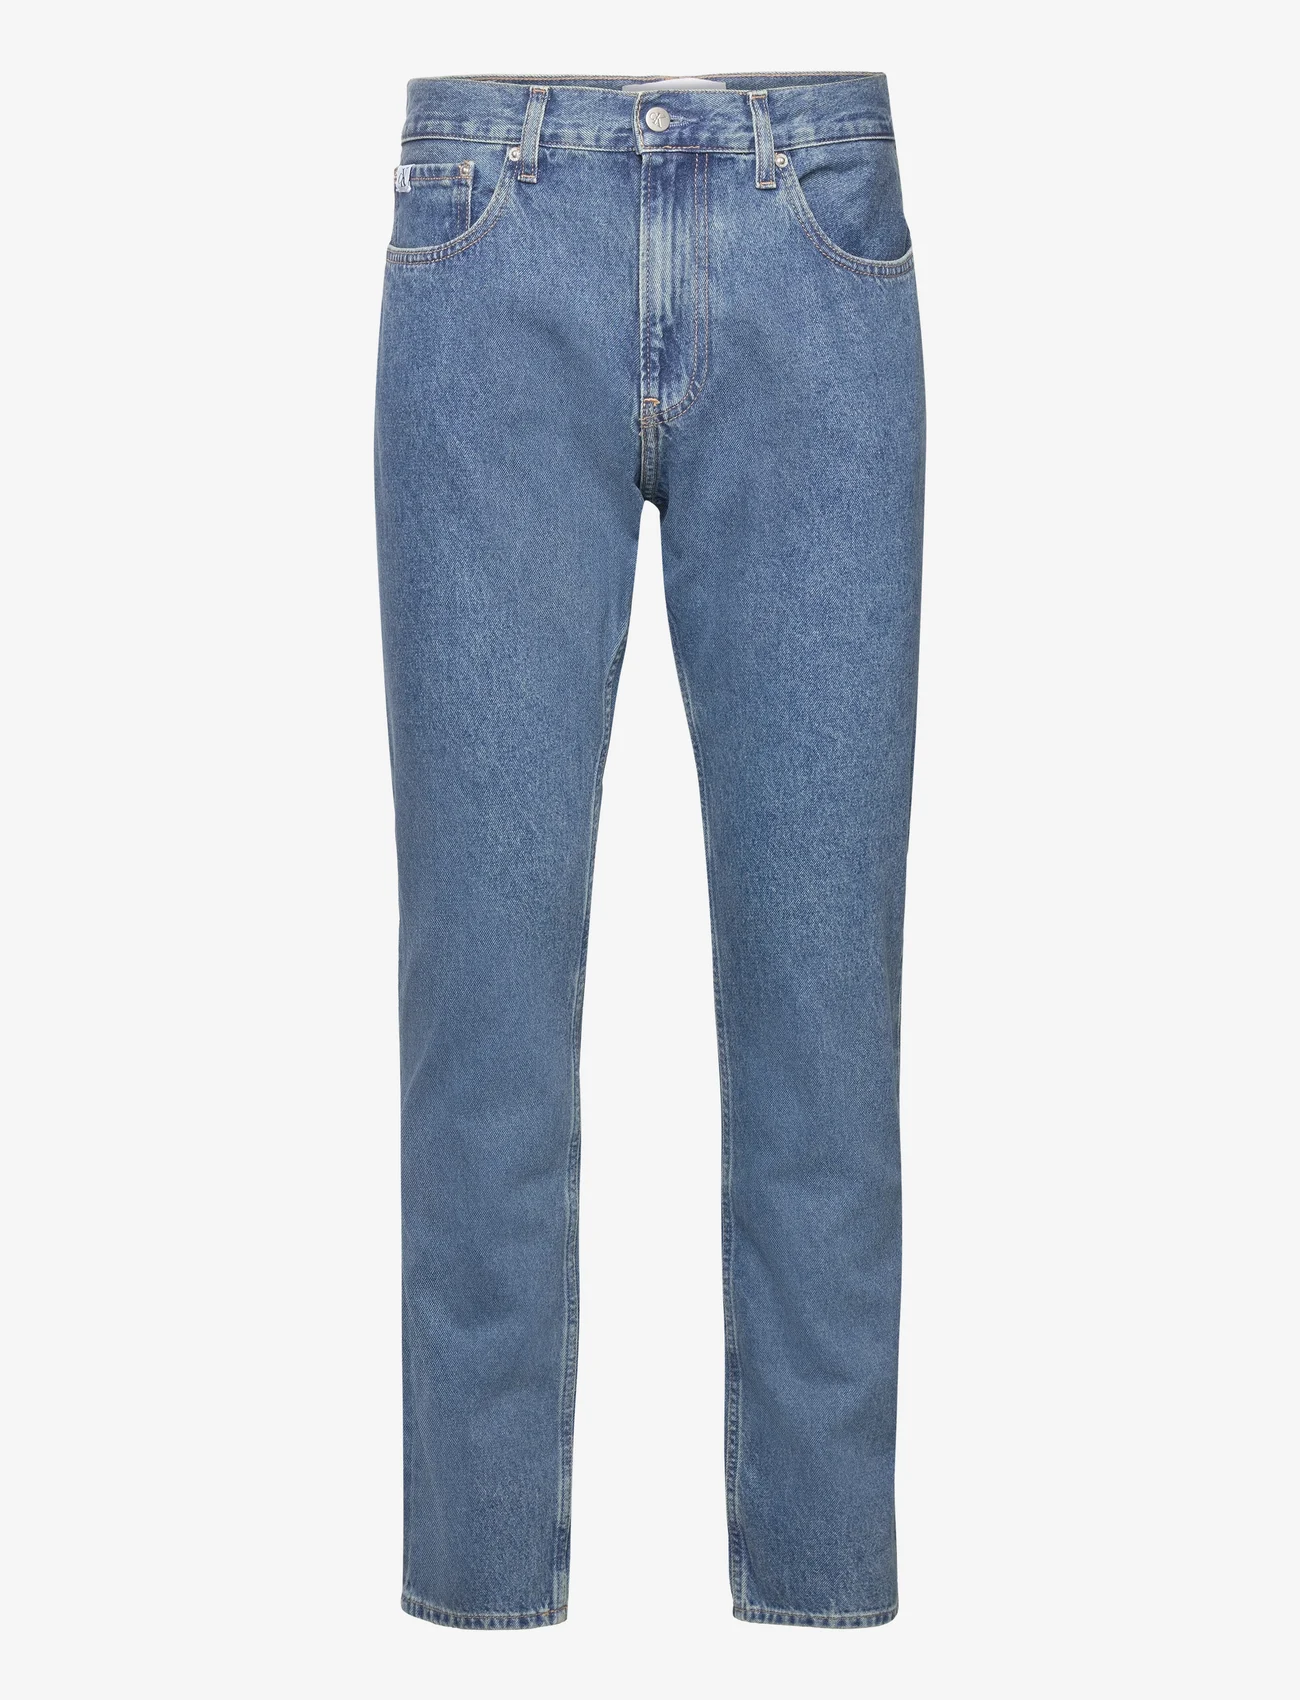 Calvin Klein Jeans - AUTHENTIC STRAIGHT - regular jeans - denim medium - 0